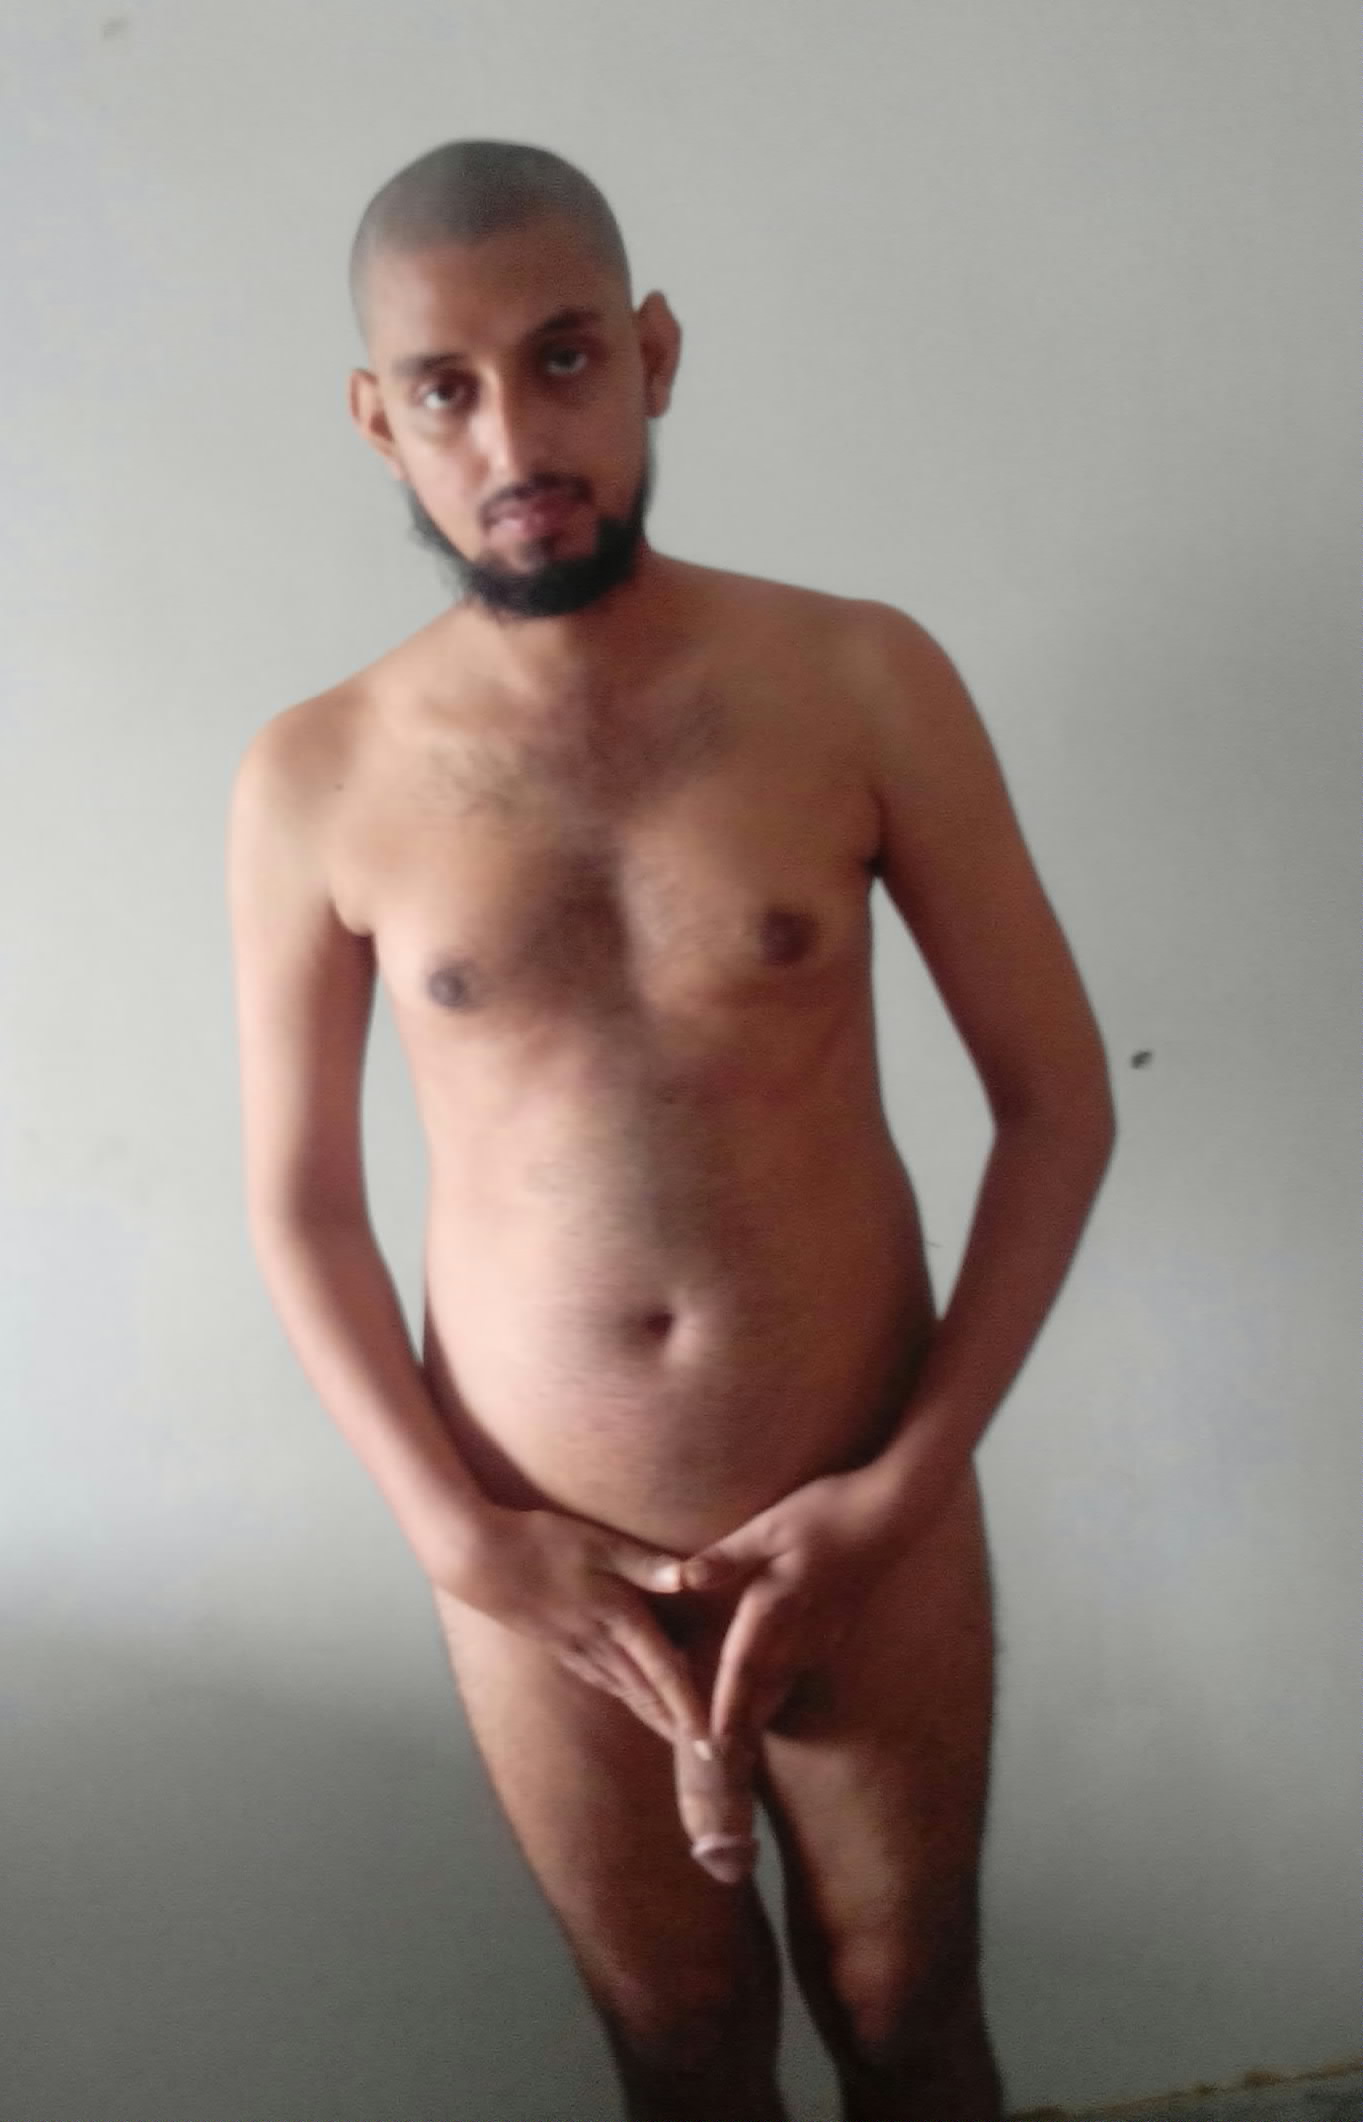 Pakistani sindh punjabi muslim boy asif arain nude naked porn pics for blowjob